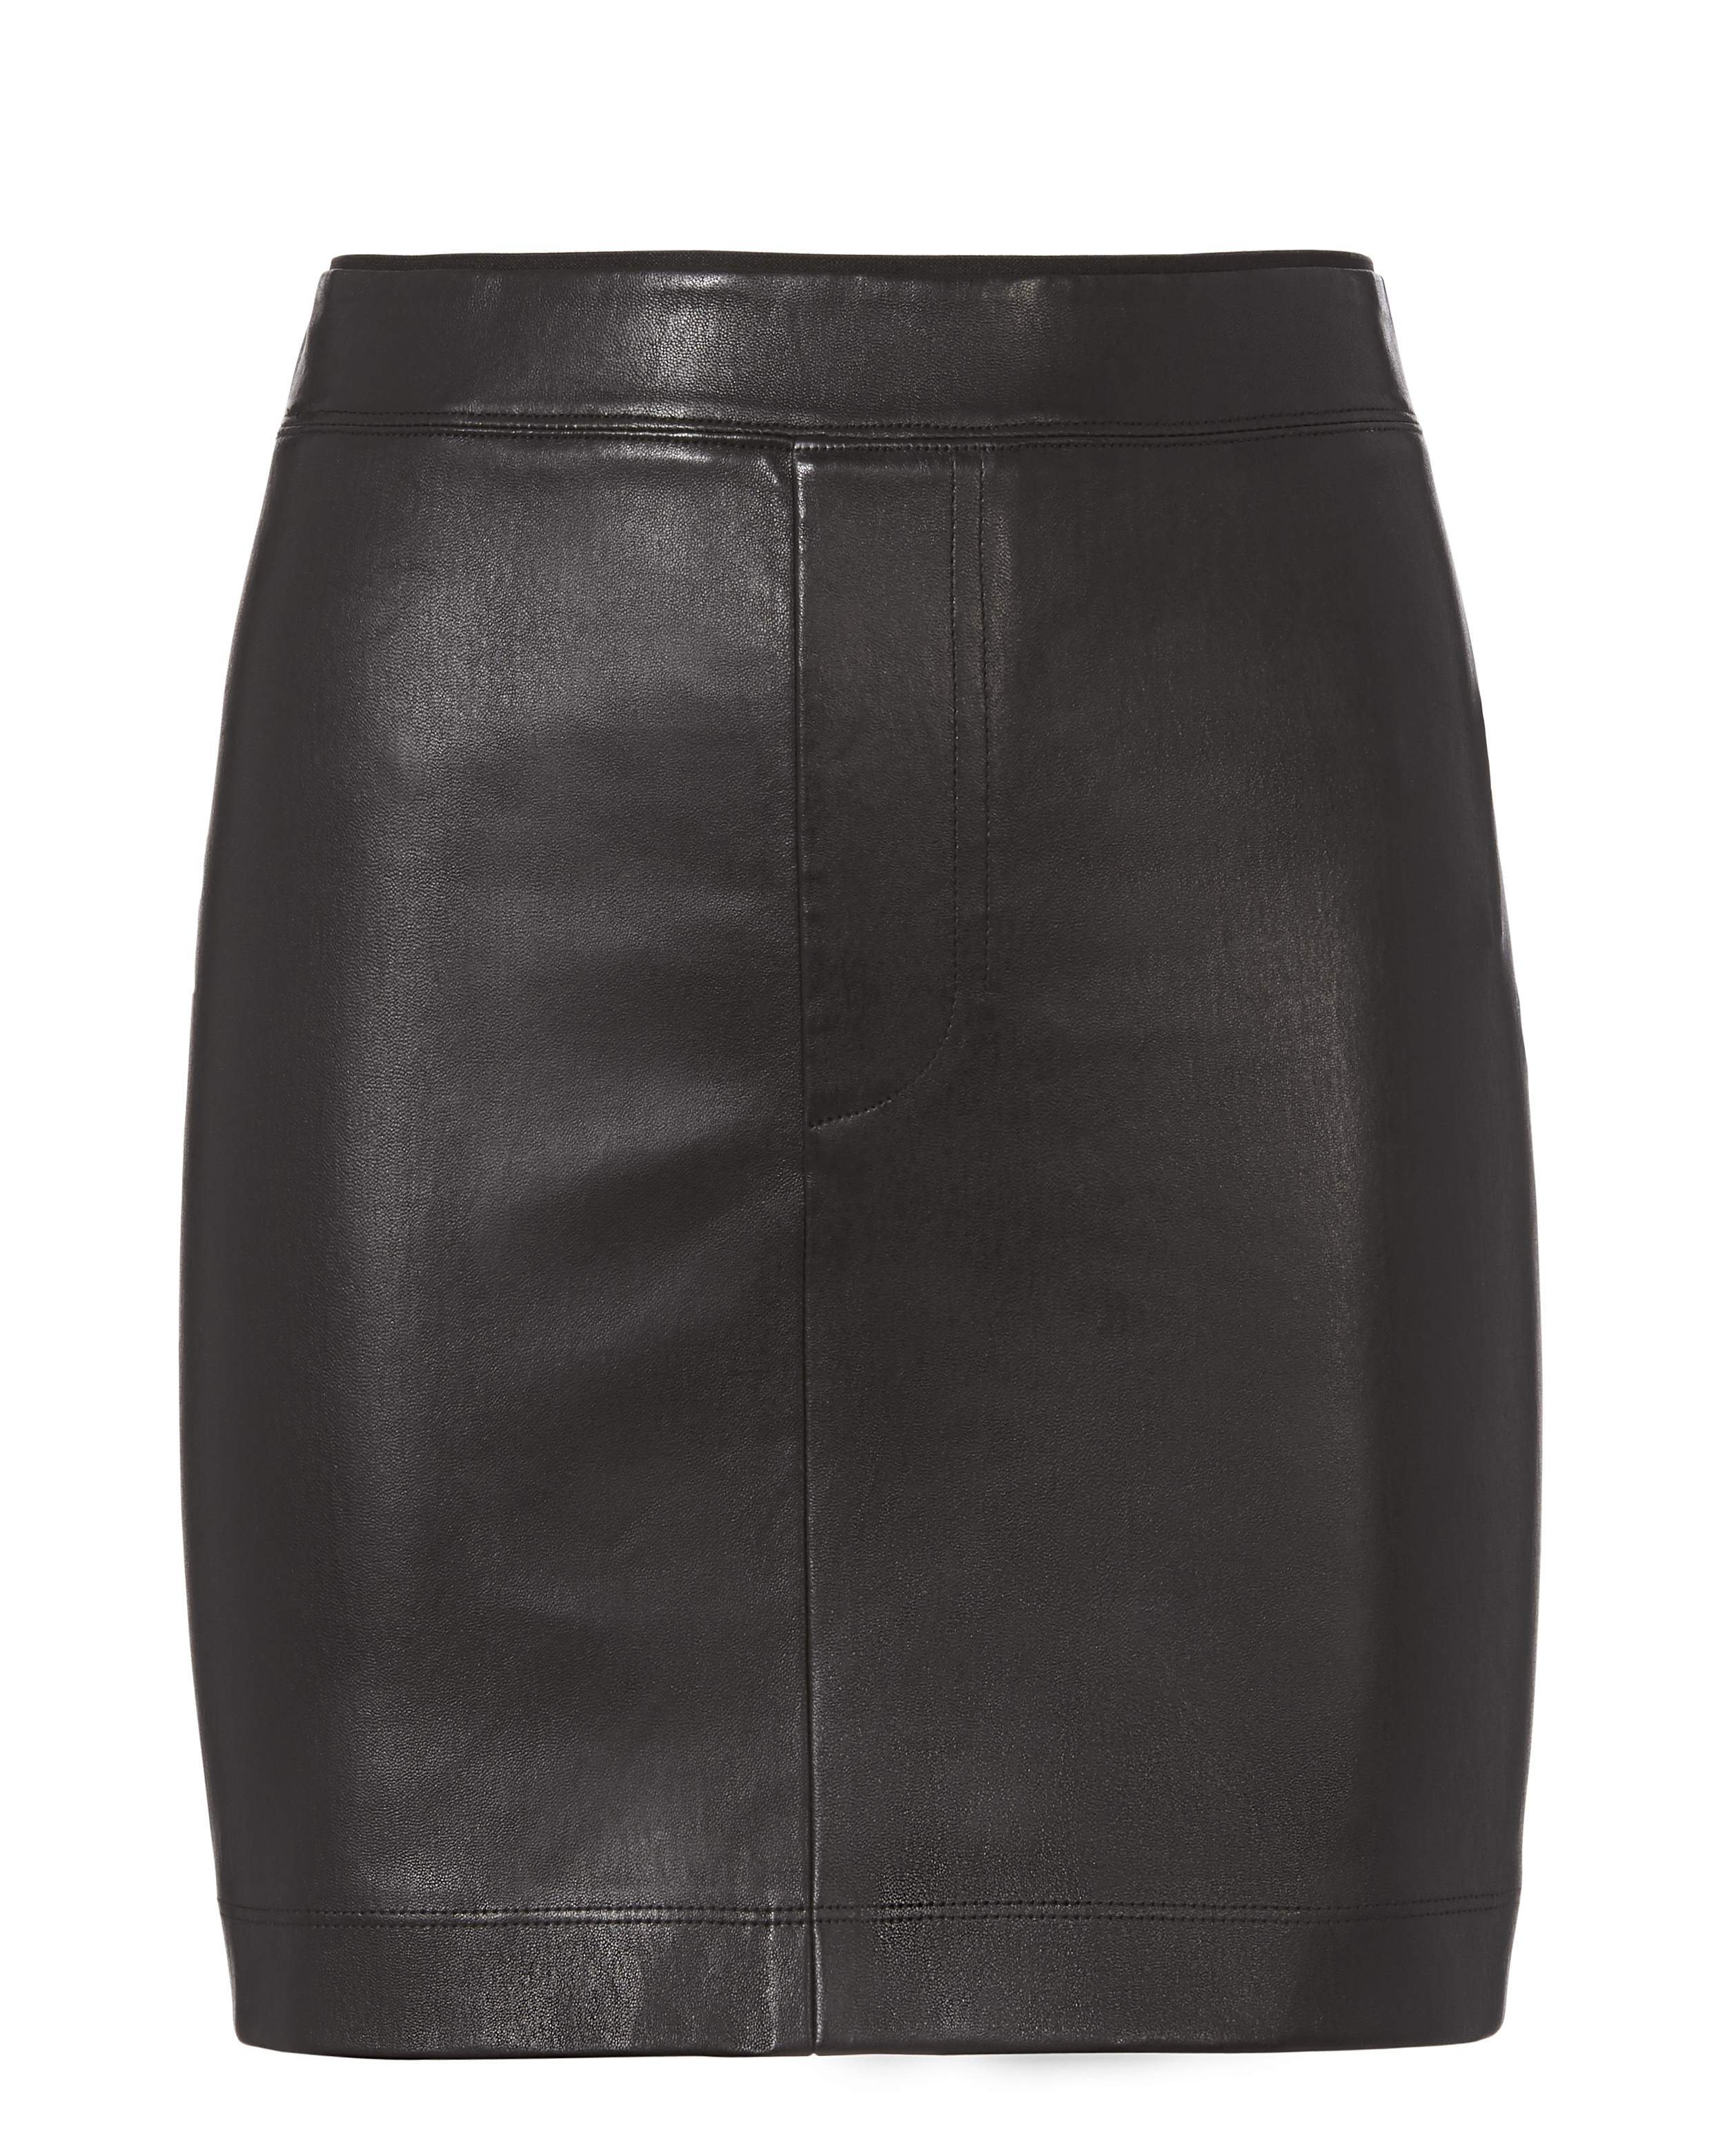 Helmut Lang Black Stretch Leather Skirt - INTERMIX®